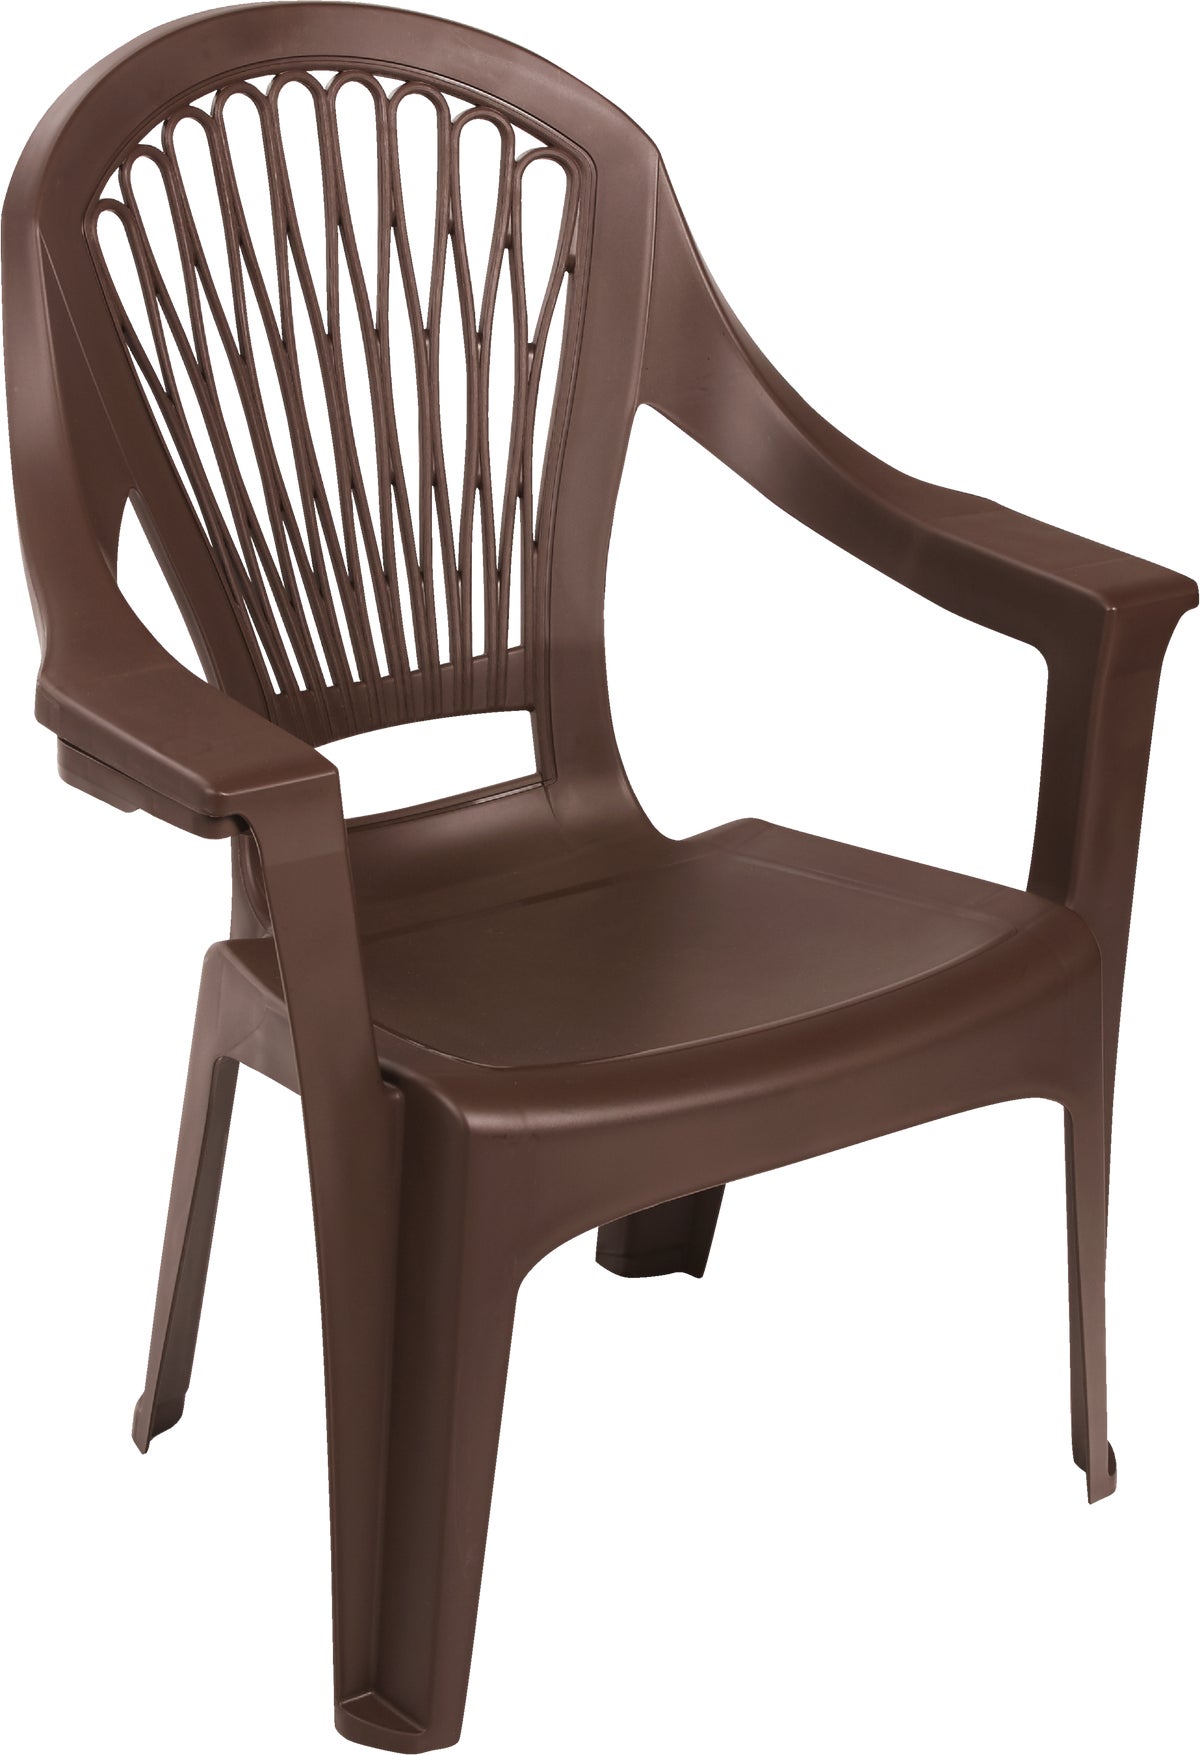 Buy Adams Big Easy High Back Stackable Chair